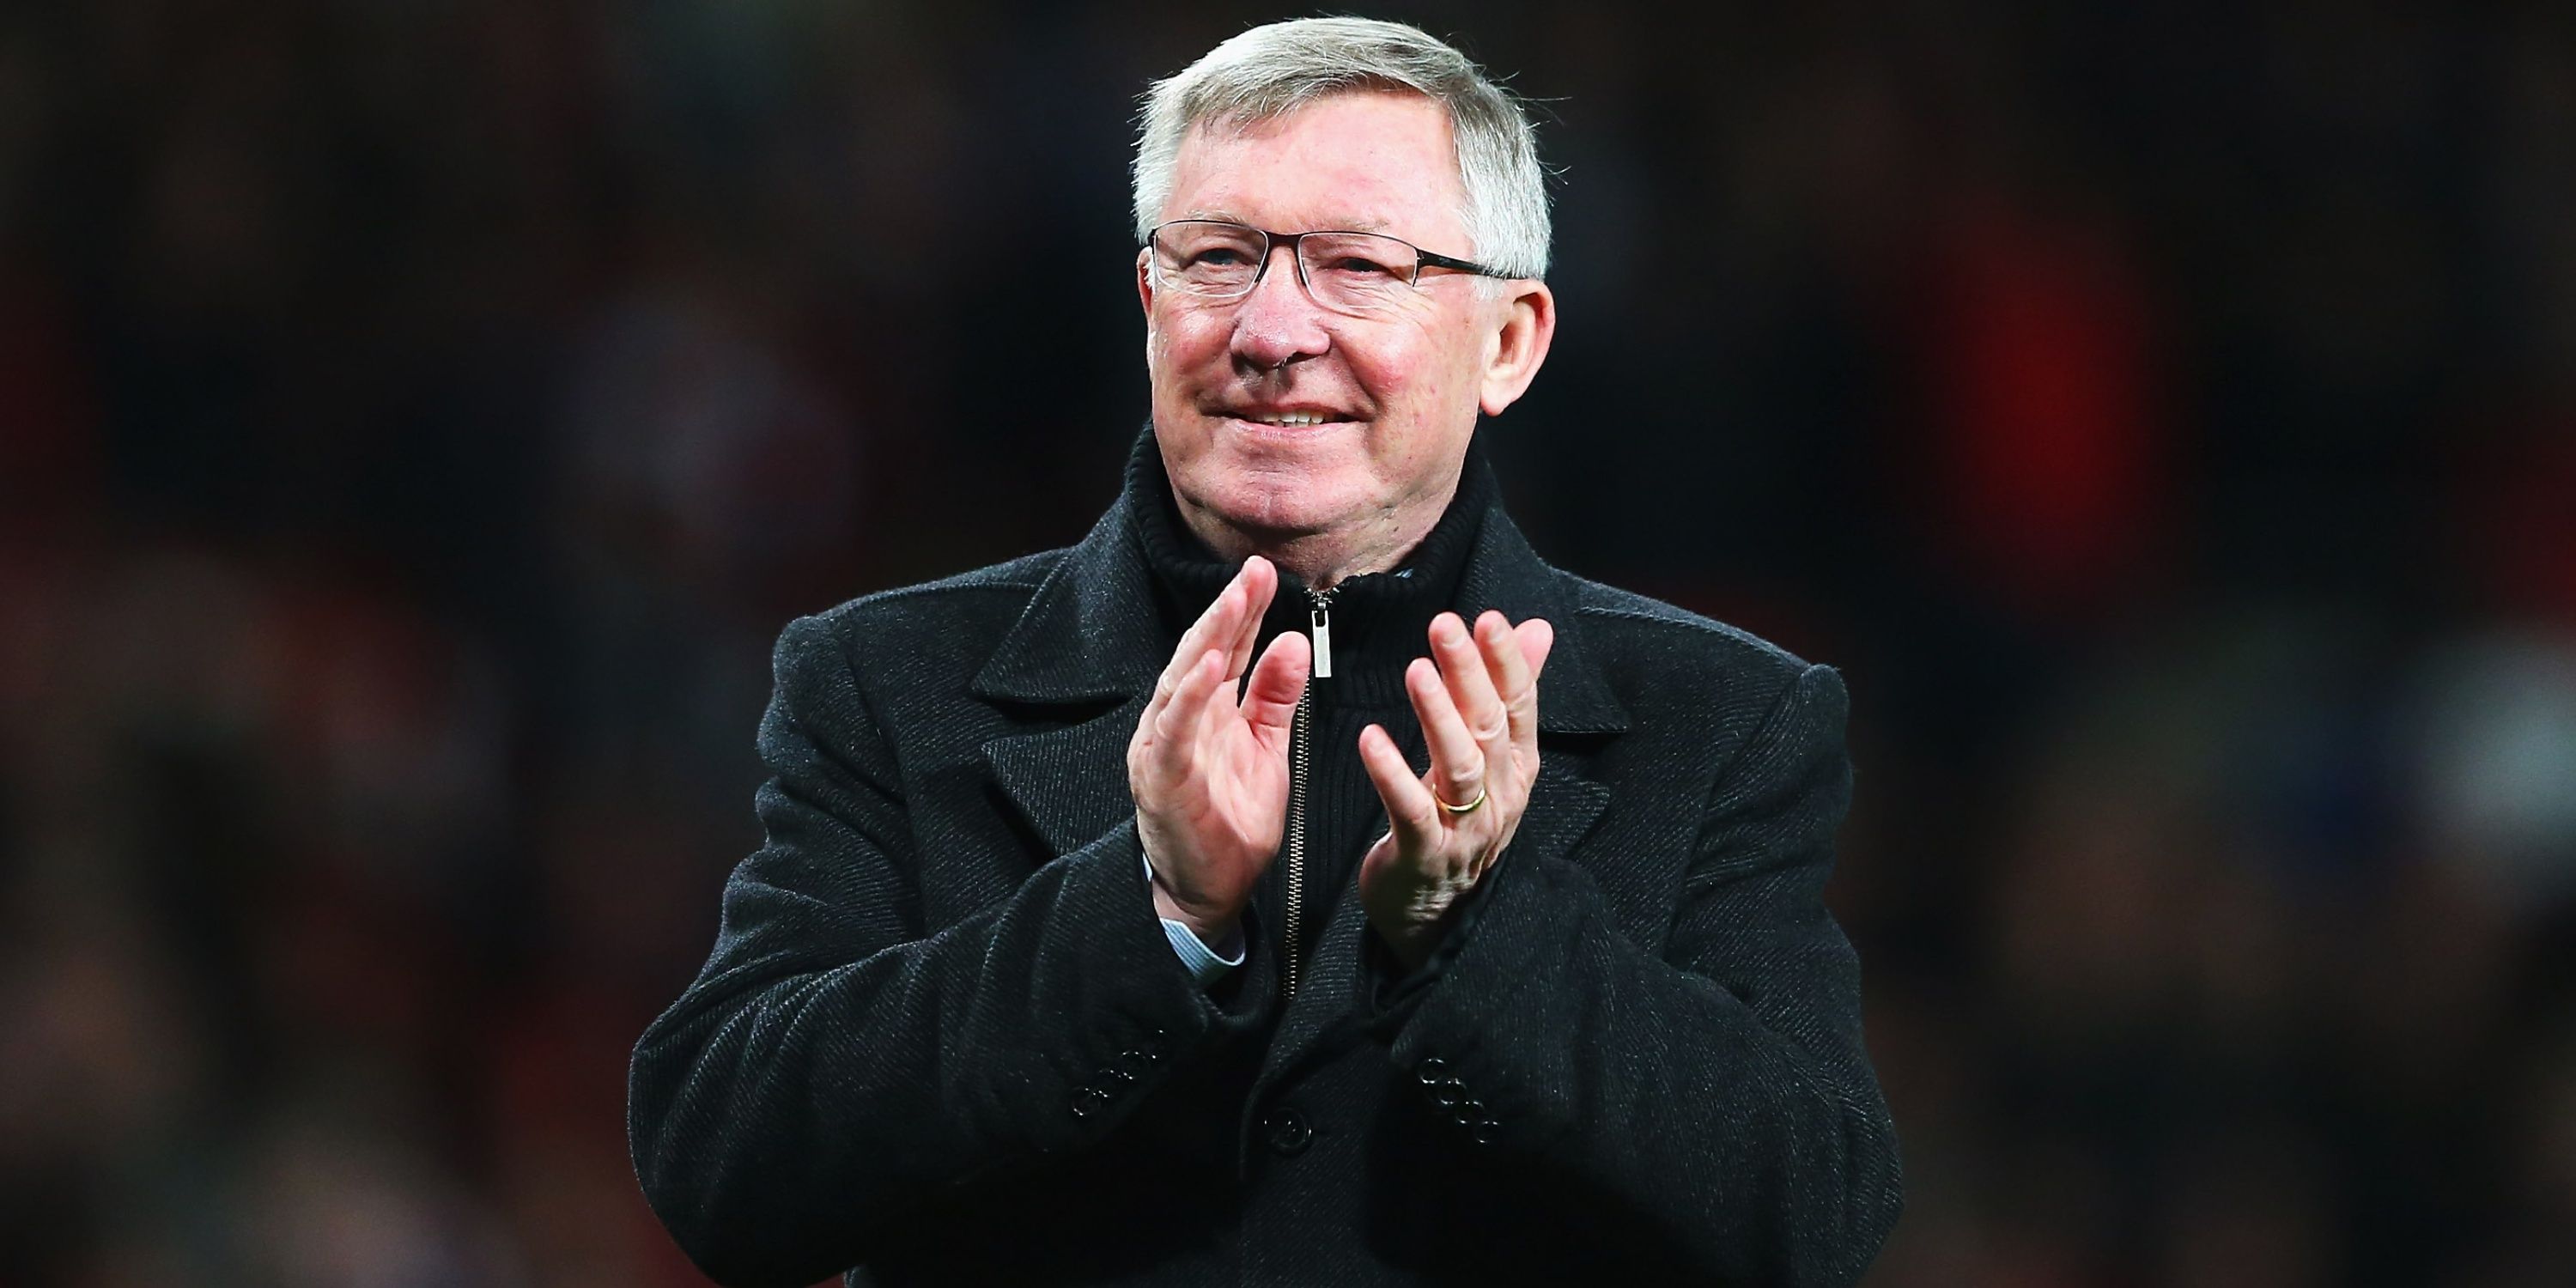 Sir Alex Ferguson, manager of Manchester United.